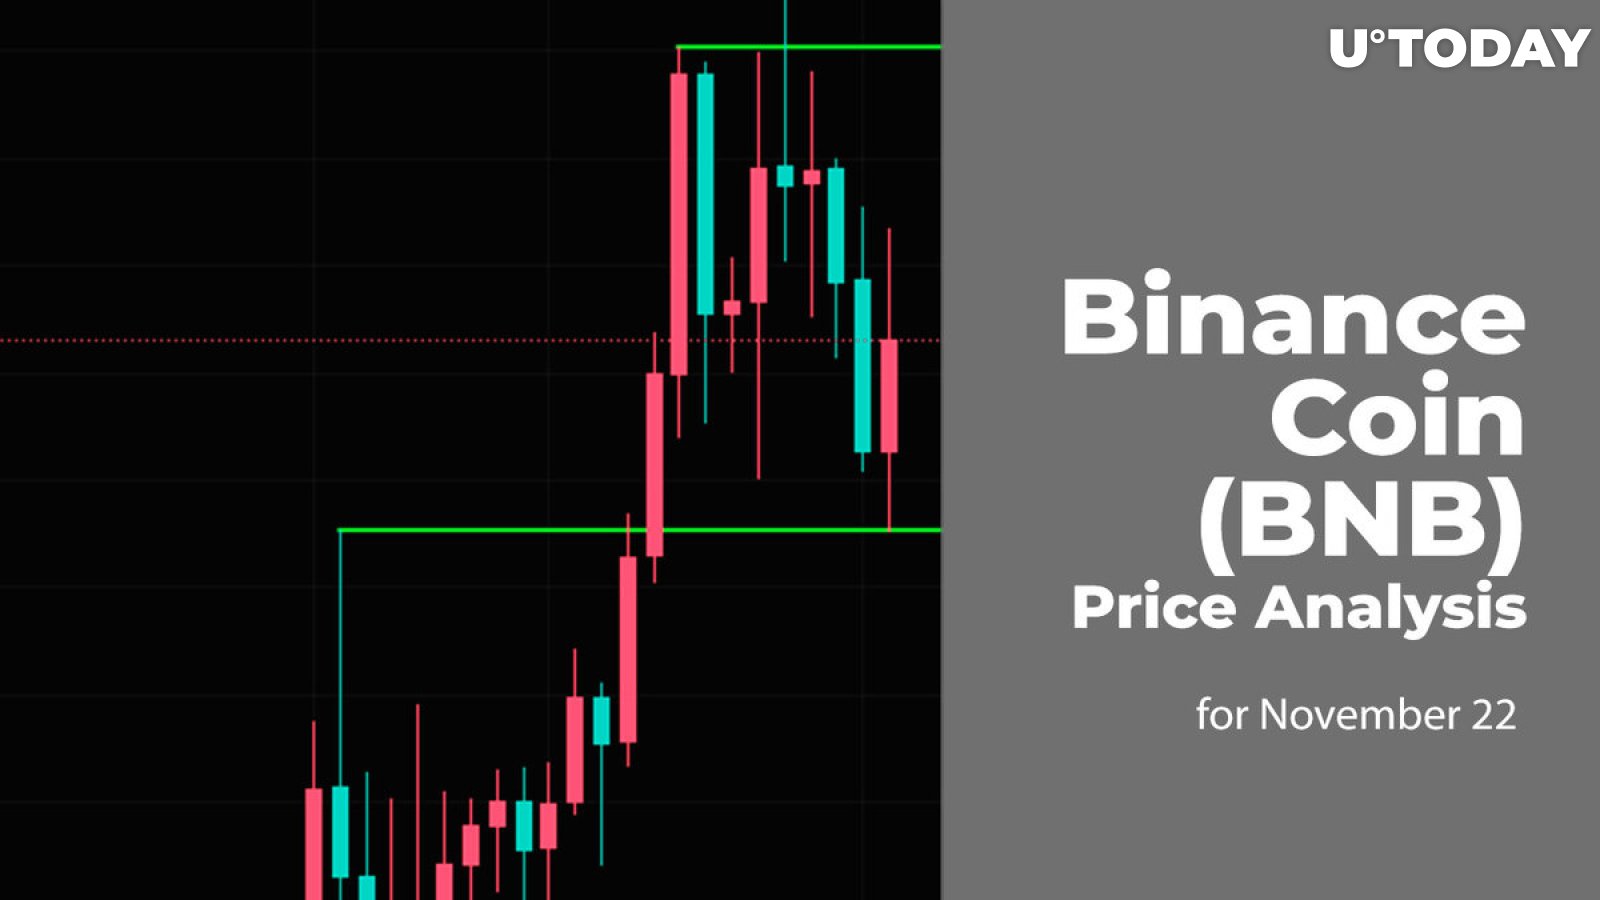 Binance Coin (BNB) Price Analysis for November 22